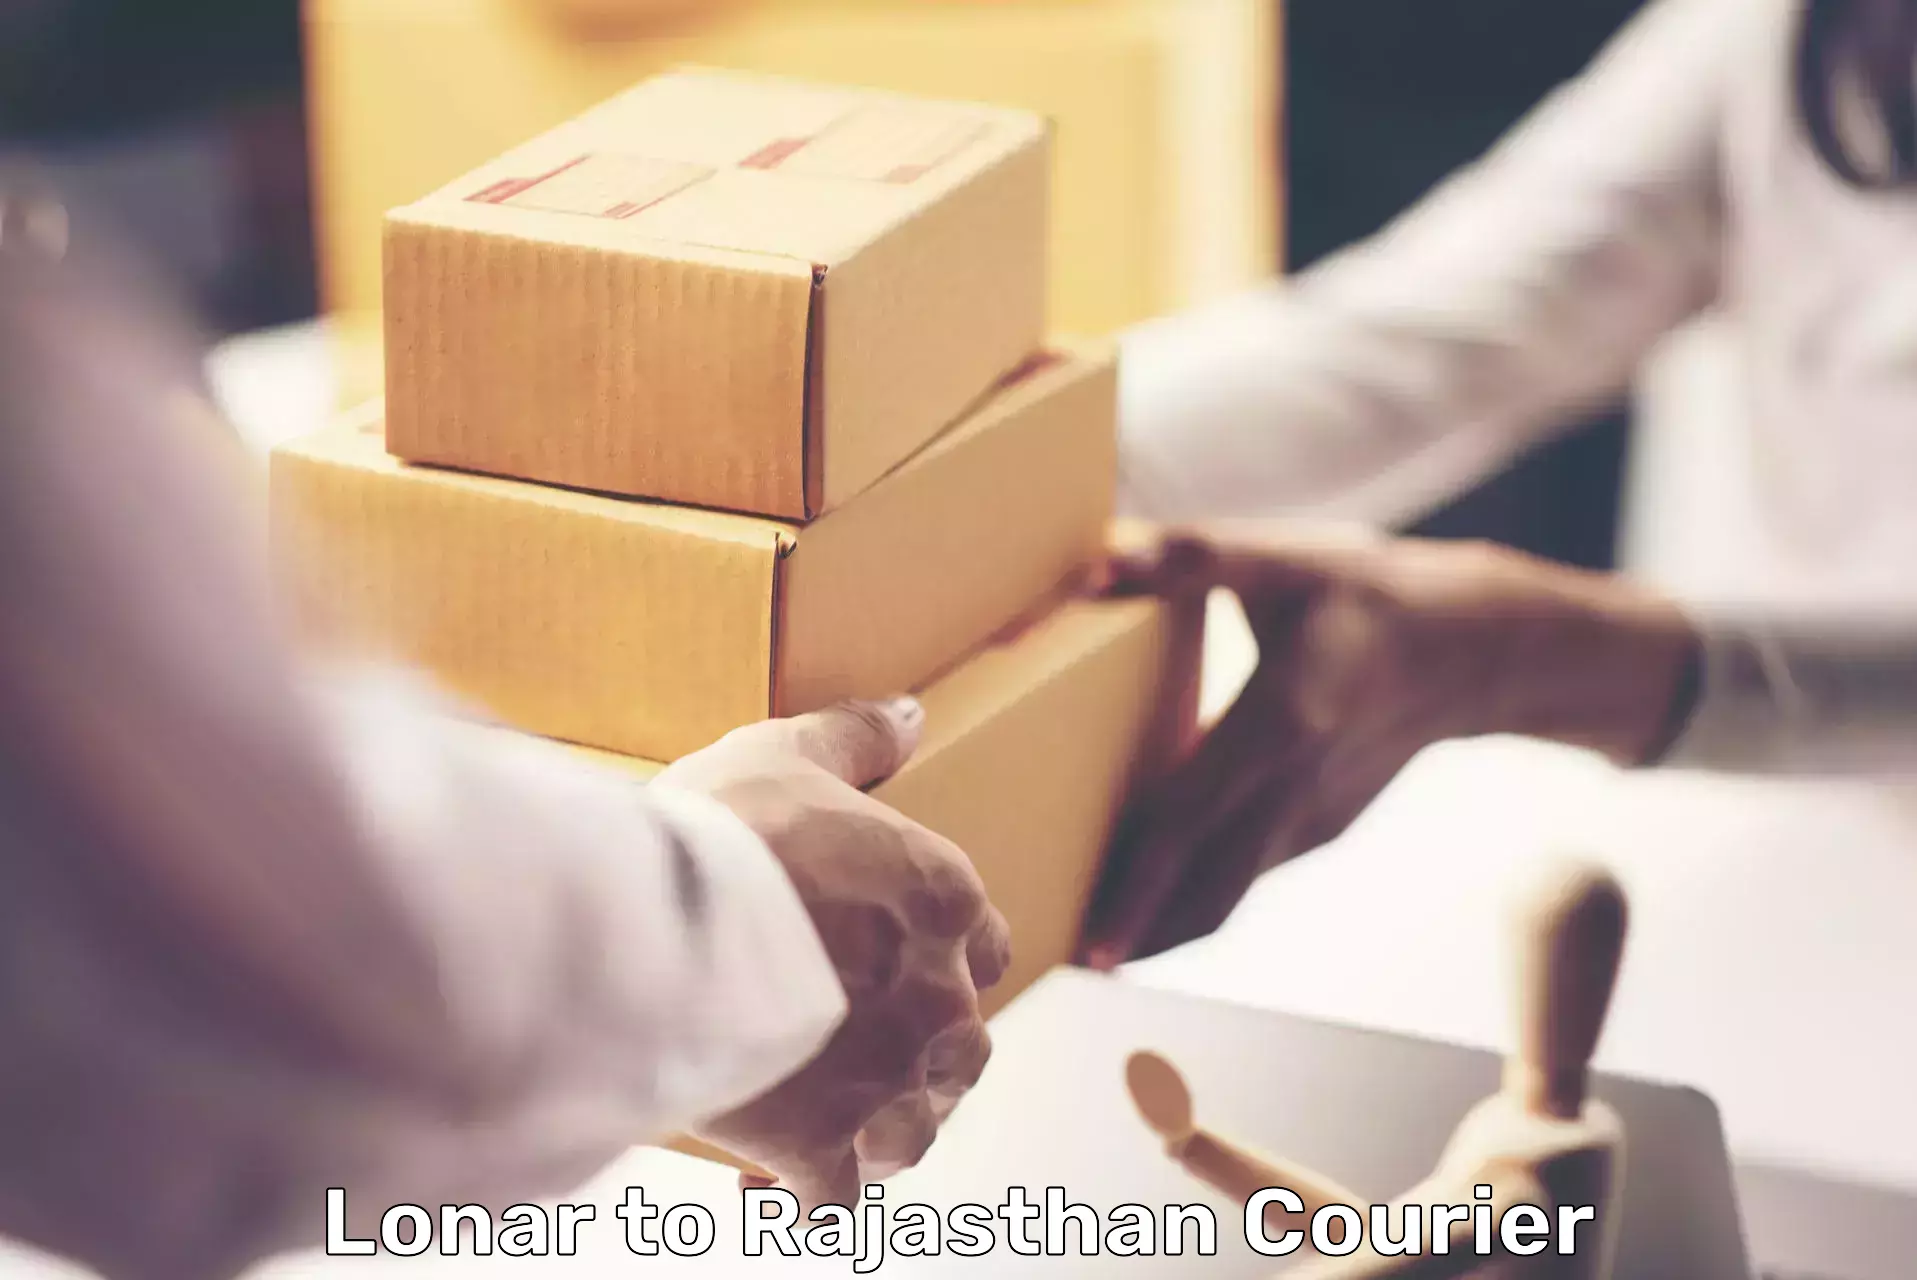 Package delivery network Lonar to IIIT Kota